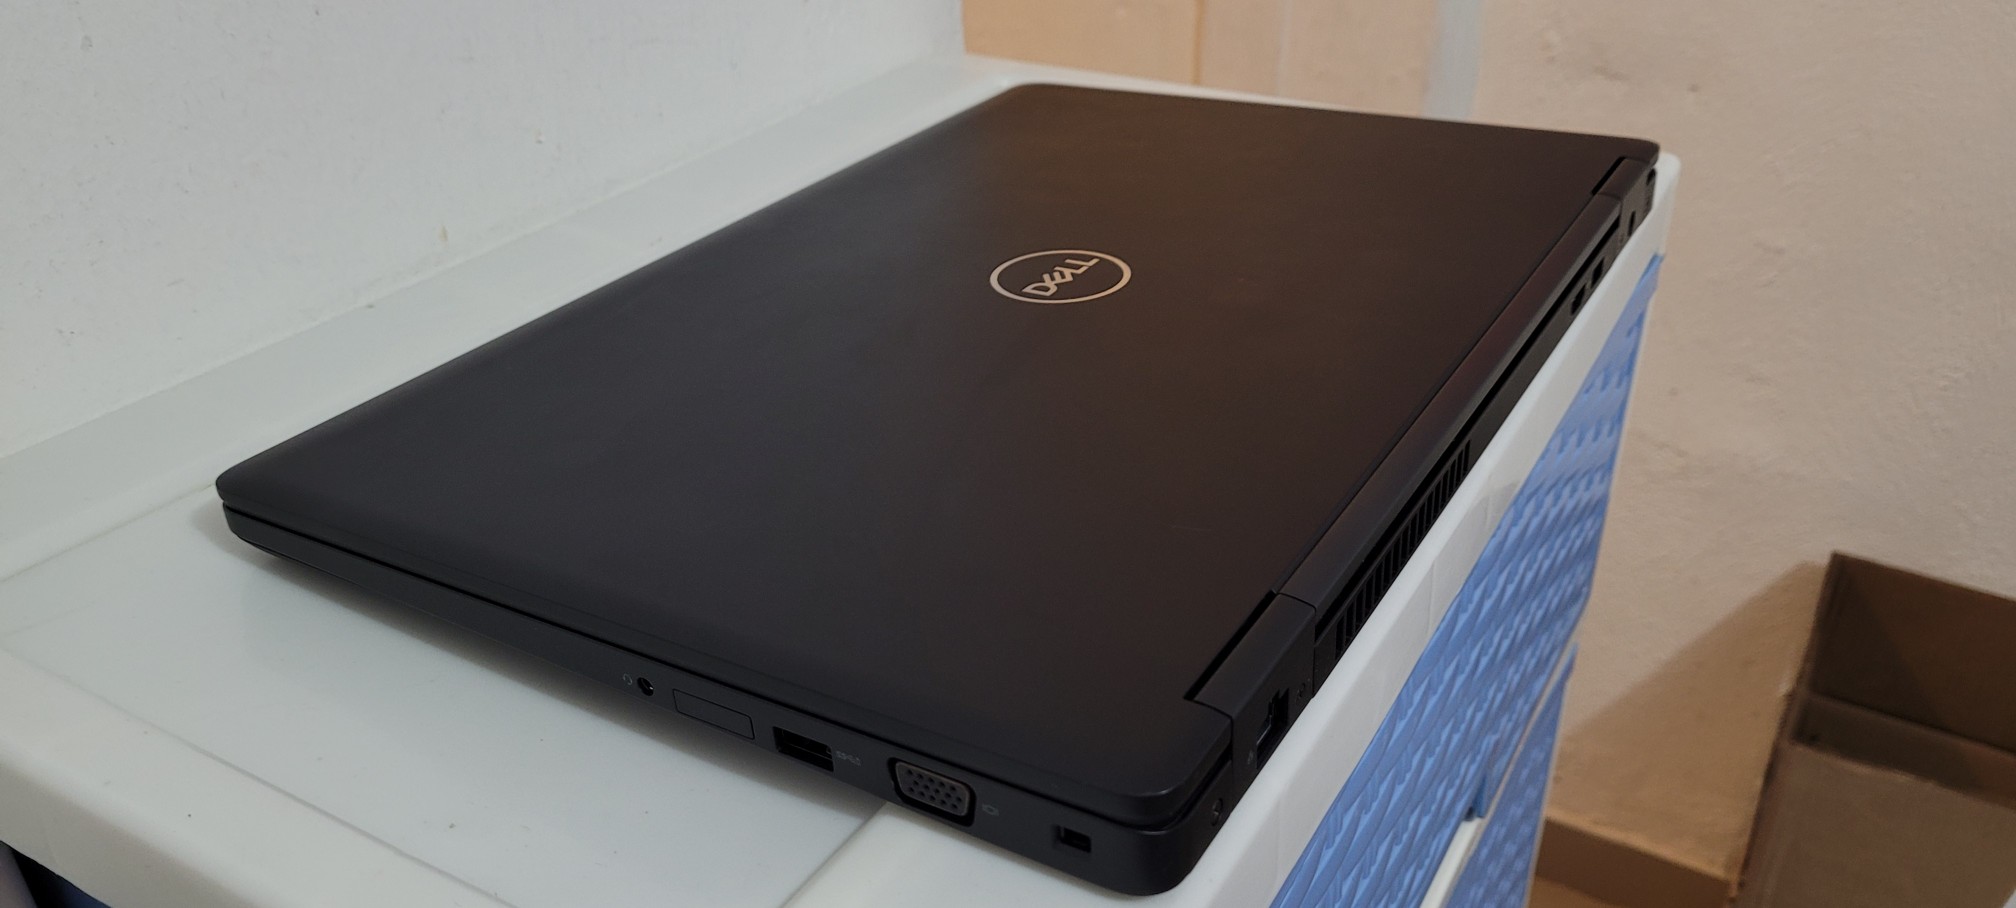 computadoras y laptops - Dell 5570 17 Pulg Core i5 6ta Gen Ram 8gb ddr4 Disco 256gb SSD Solido hdmi 2